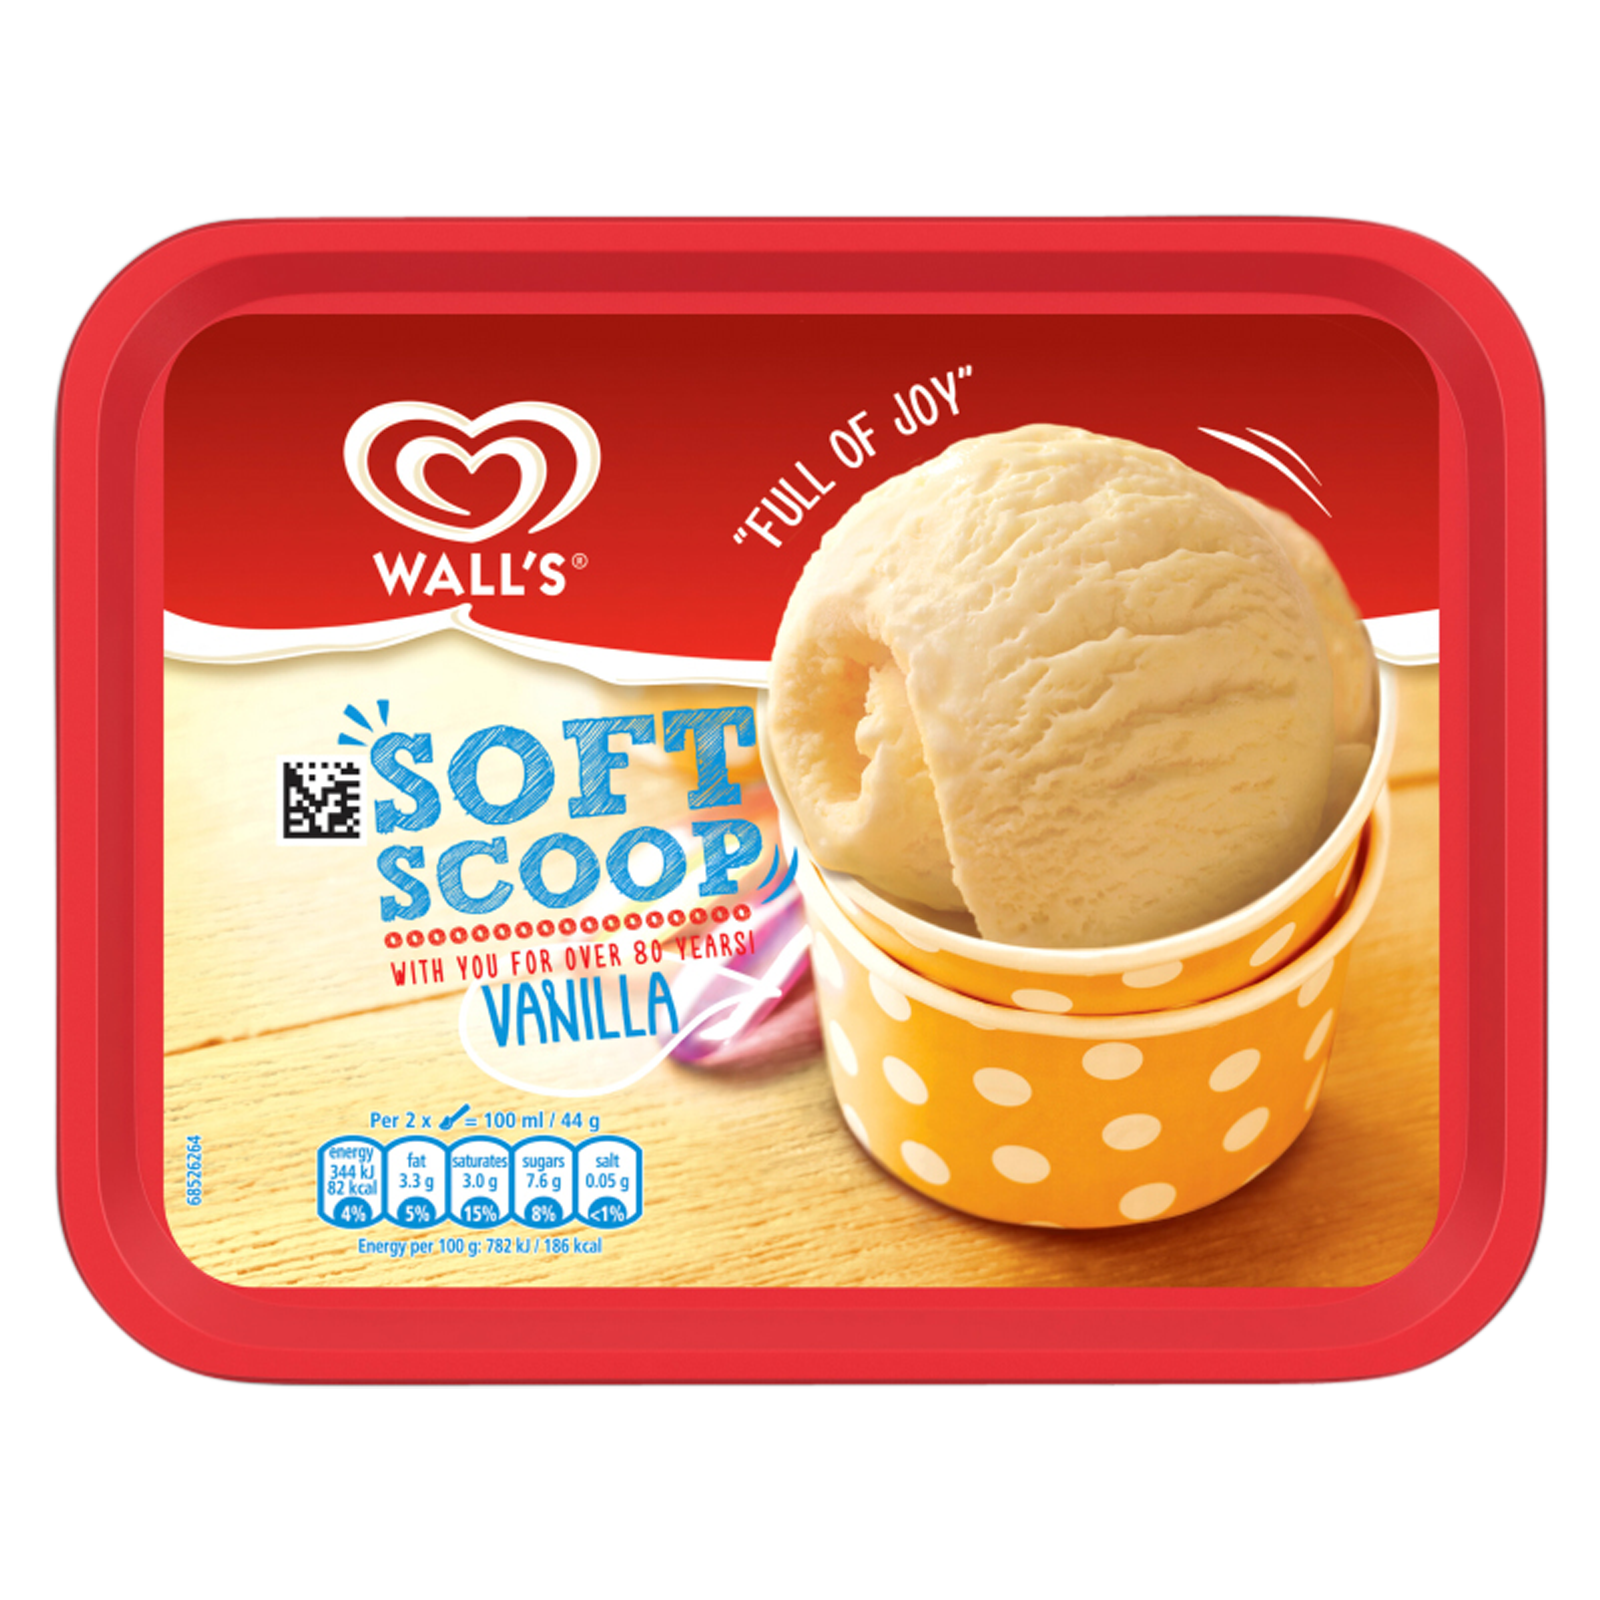 Wall's Soft Scoop Vanilla, 1.8L